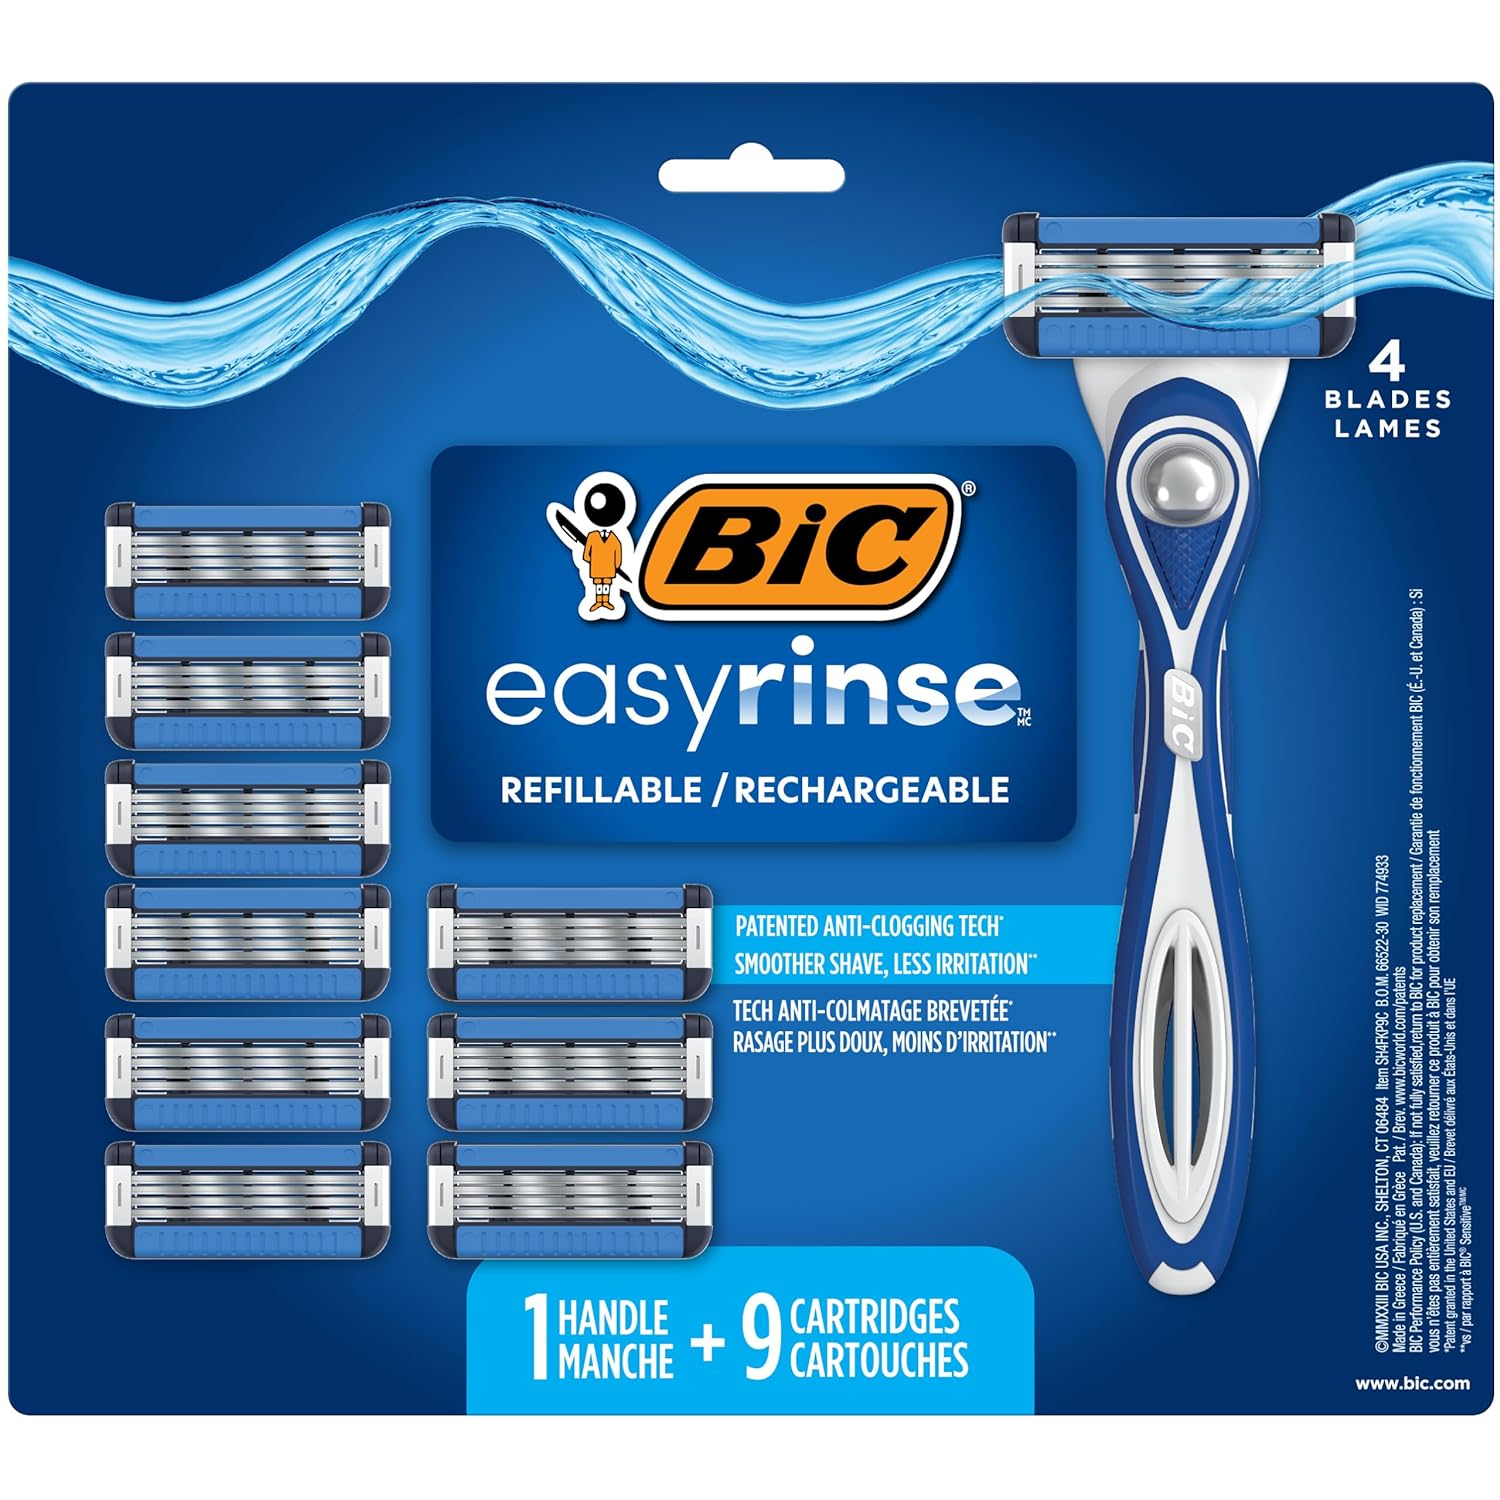 BIC EasyRinse Anti-Clogging, Refillable Men' Razors With 4 Blades, 1 Handle and 9 Refill Razor Cartridges Razor Kit